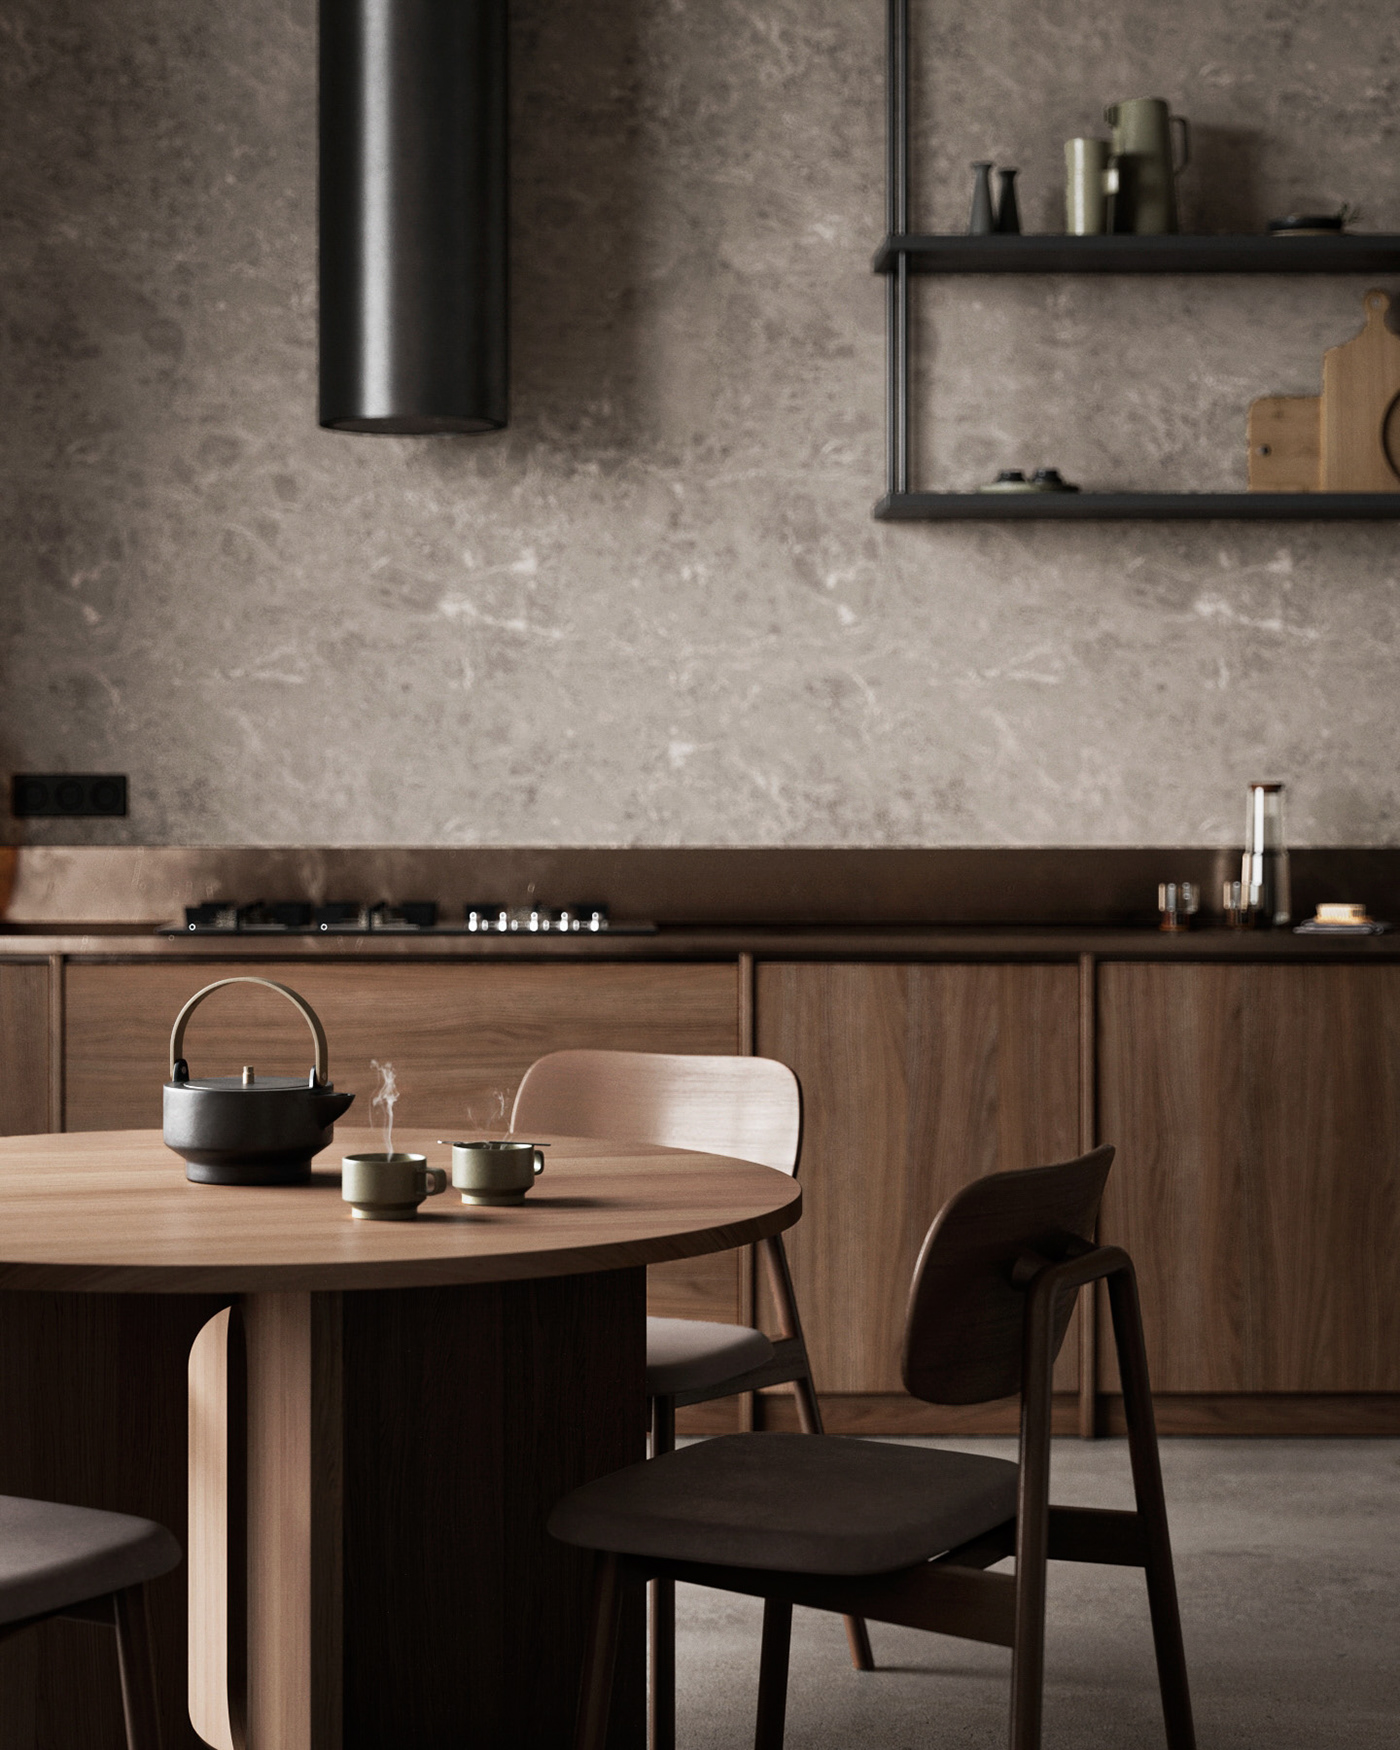 3ds max background corona render  interior design  kitchen design living room photorealism scene VİZALİZATİON